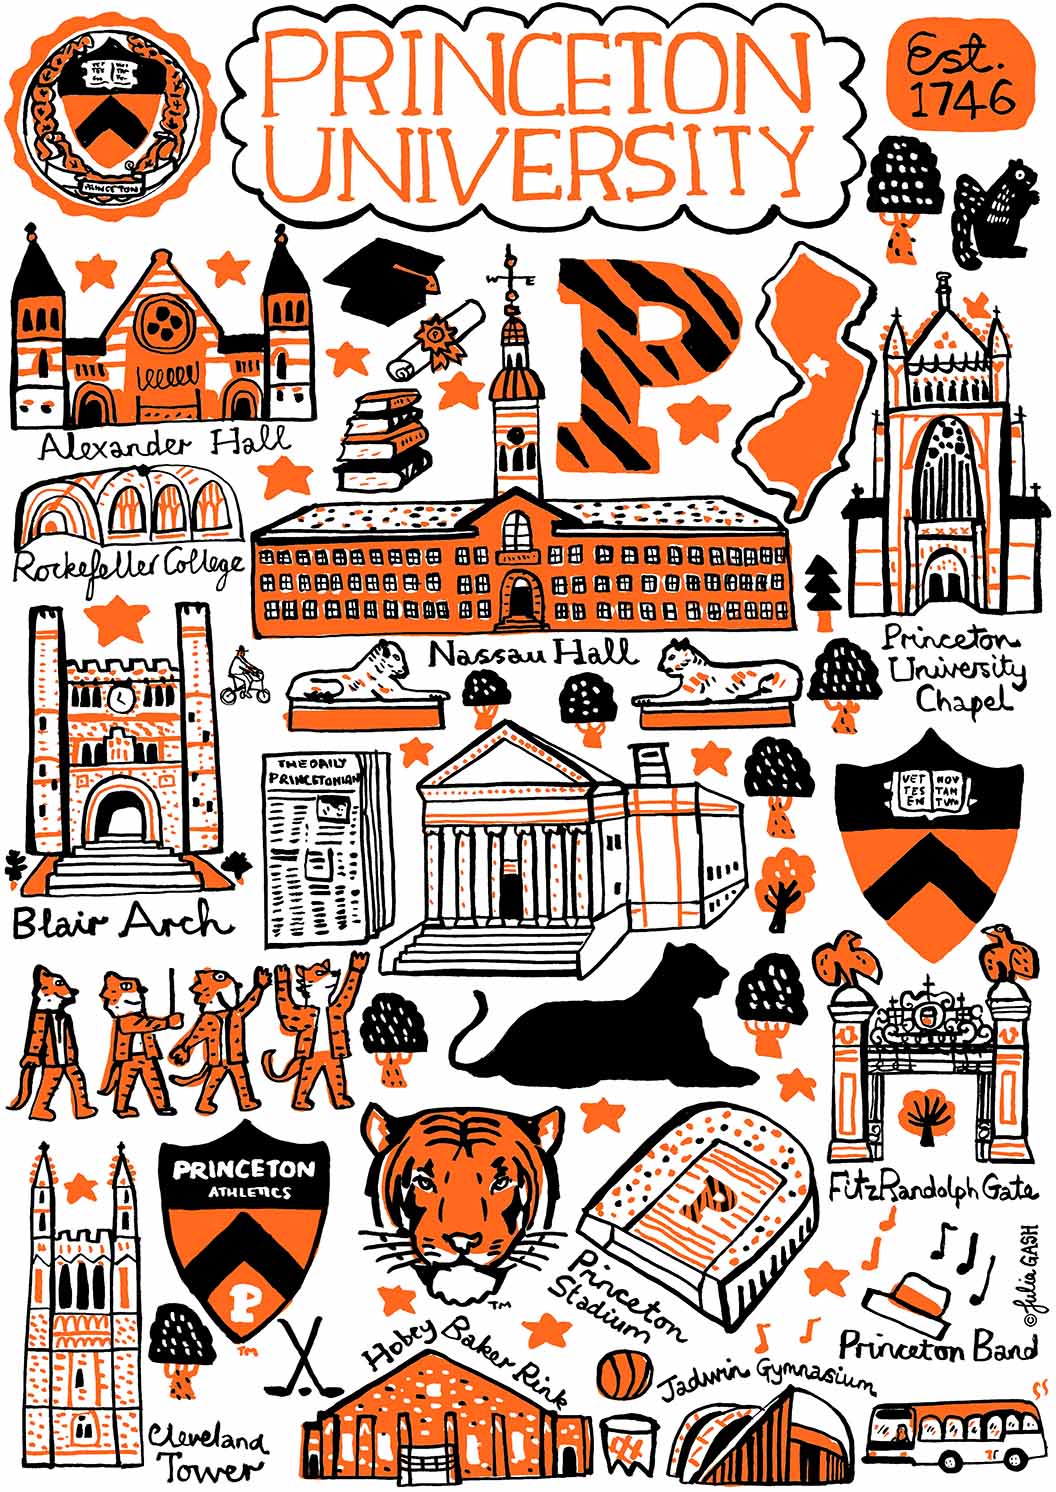 Princeton University Design by Julia Gash